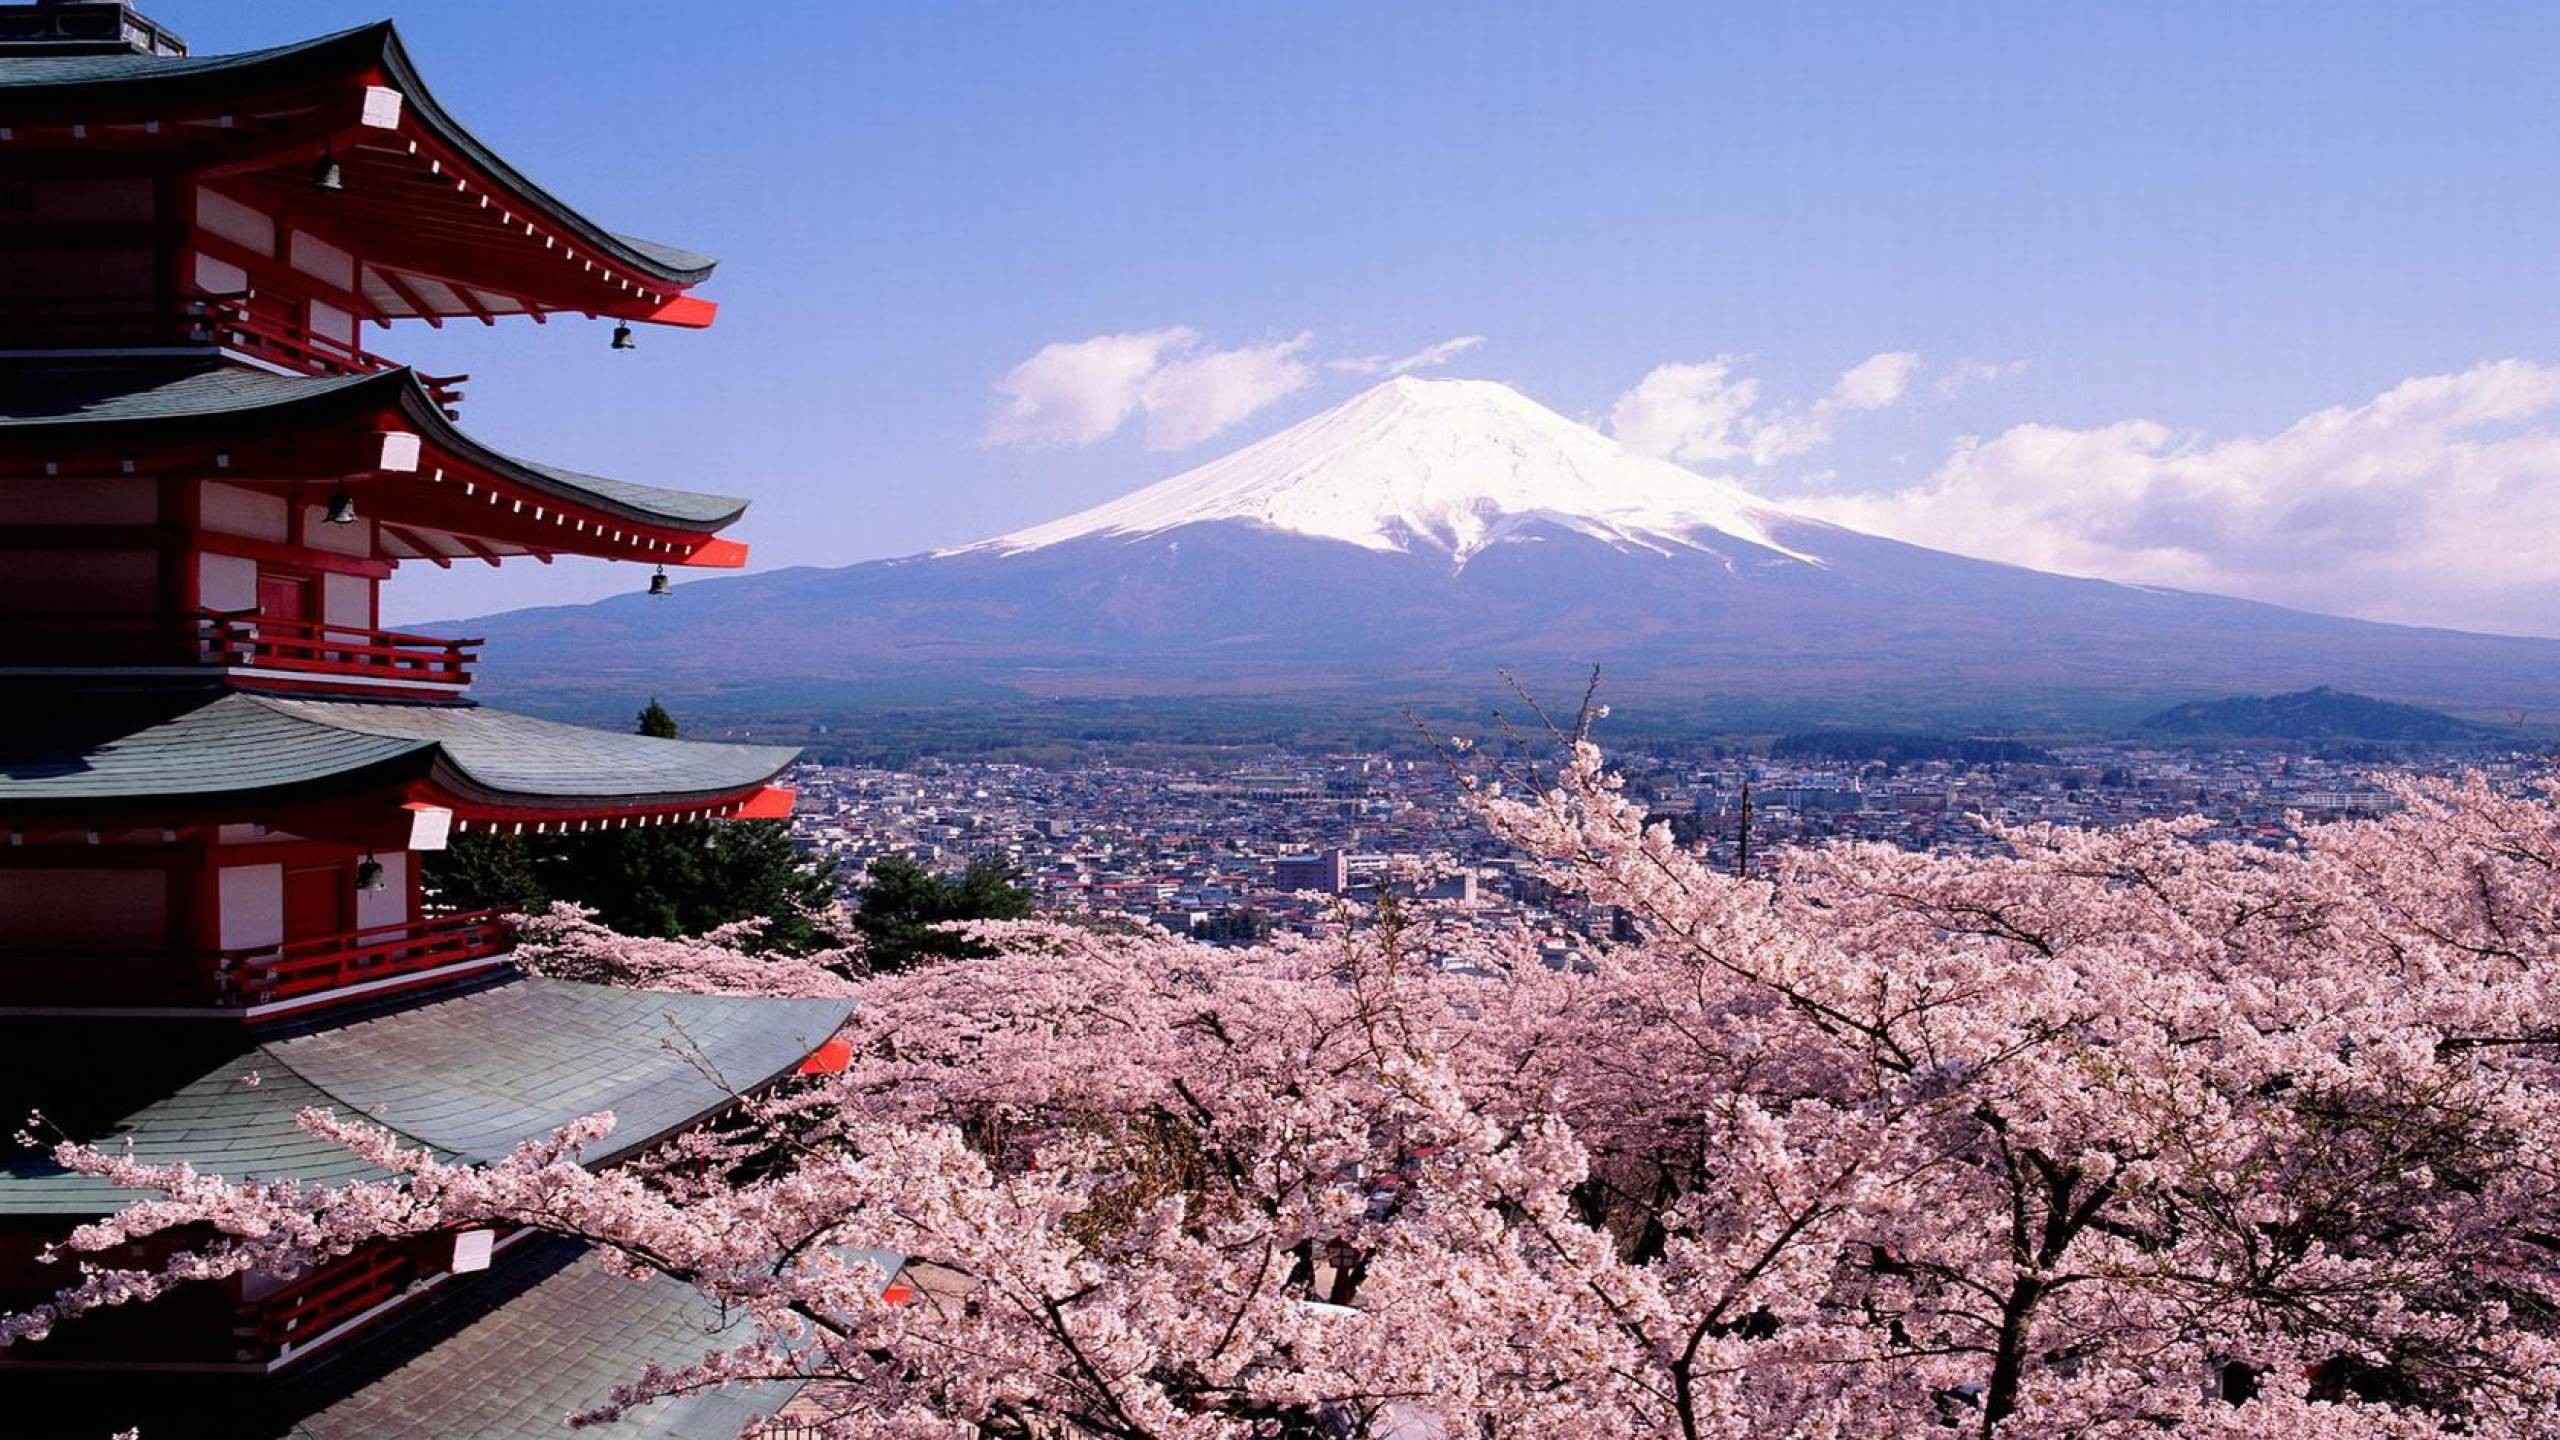 2560x1440 Mount Fuji Japan Wallpaper - Travel HD Wallpapers